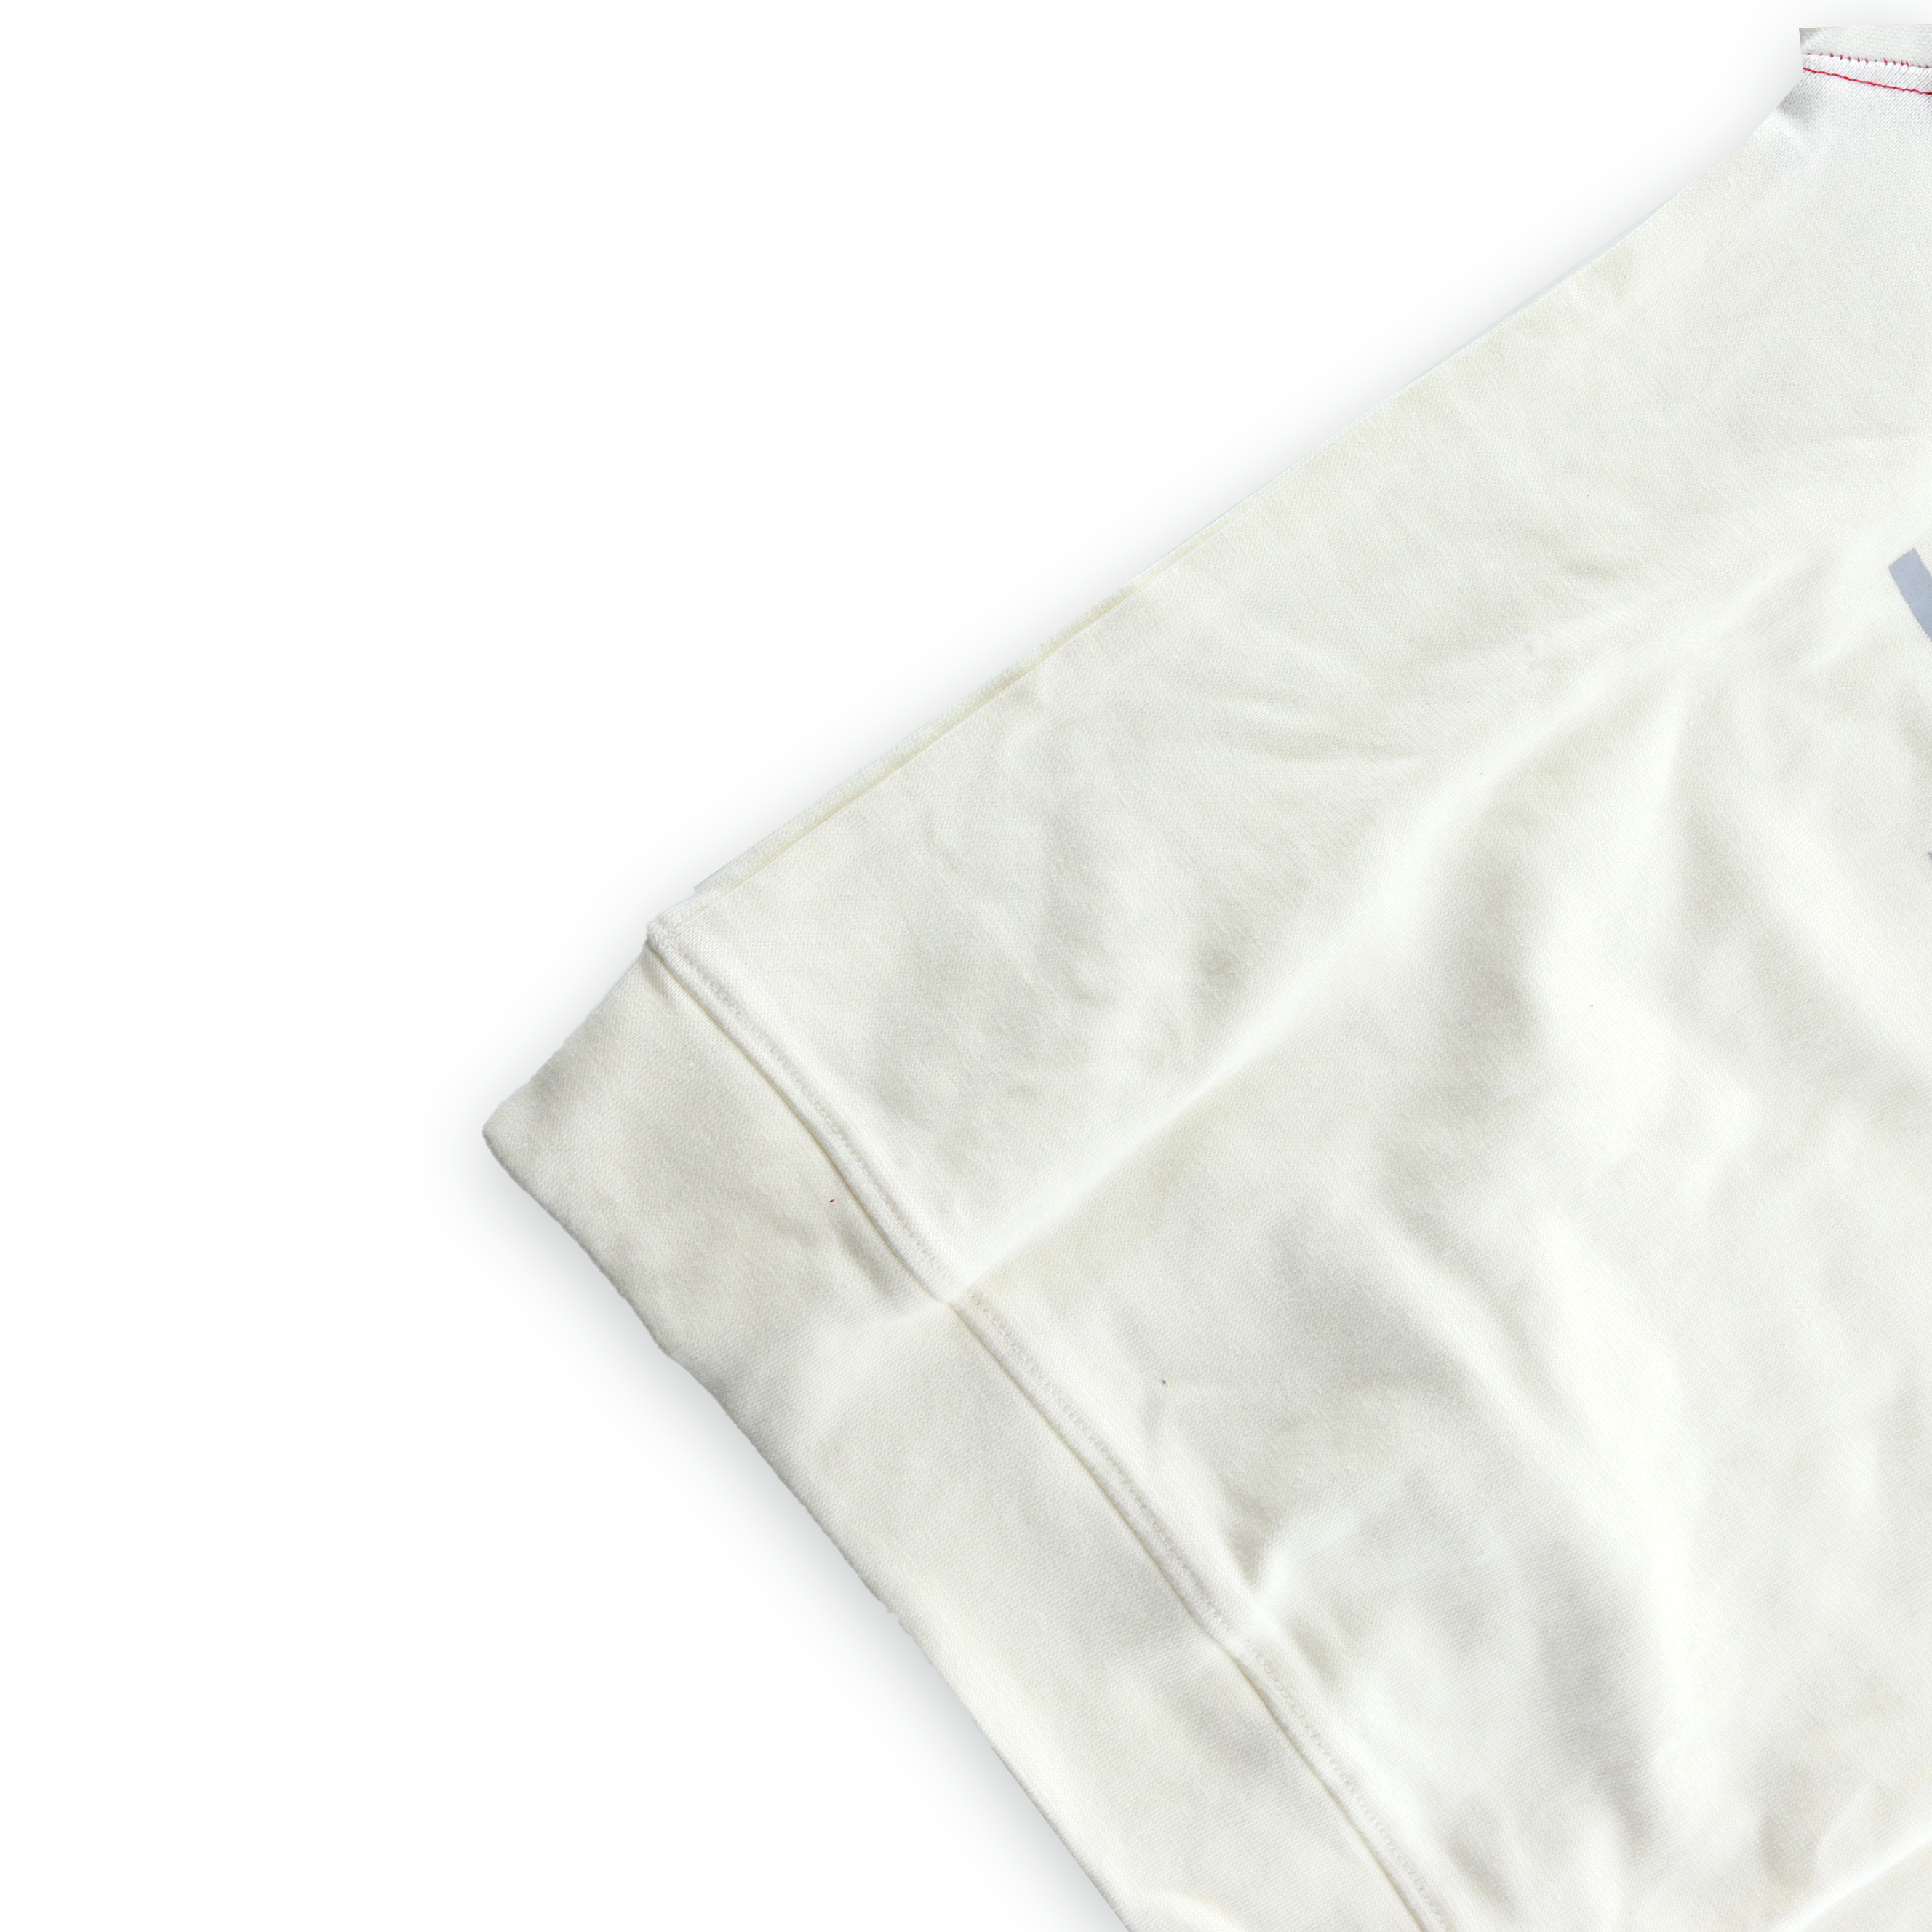 Men Colorblock Polo Neck Organic Cotton Red, White T-Shirt